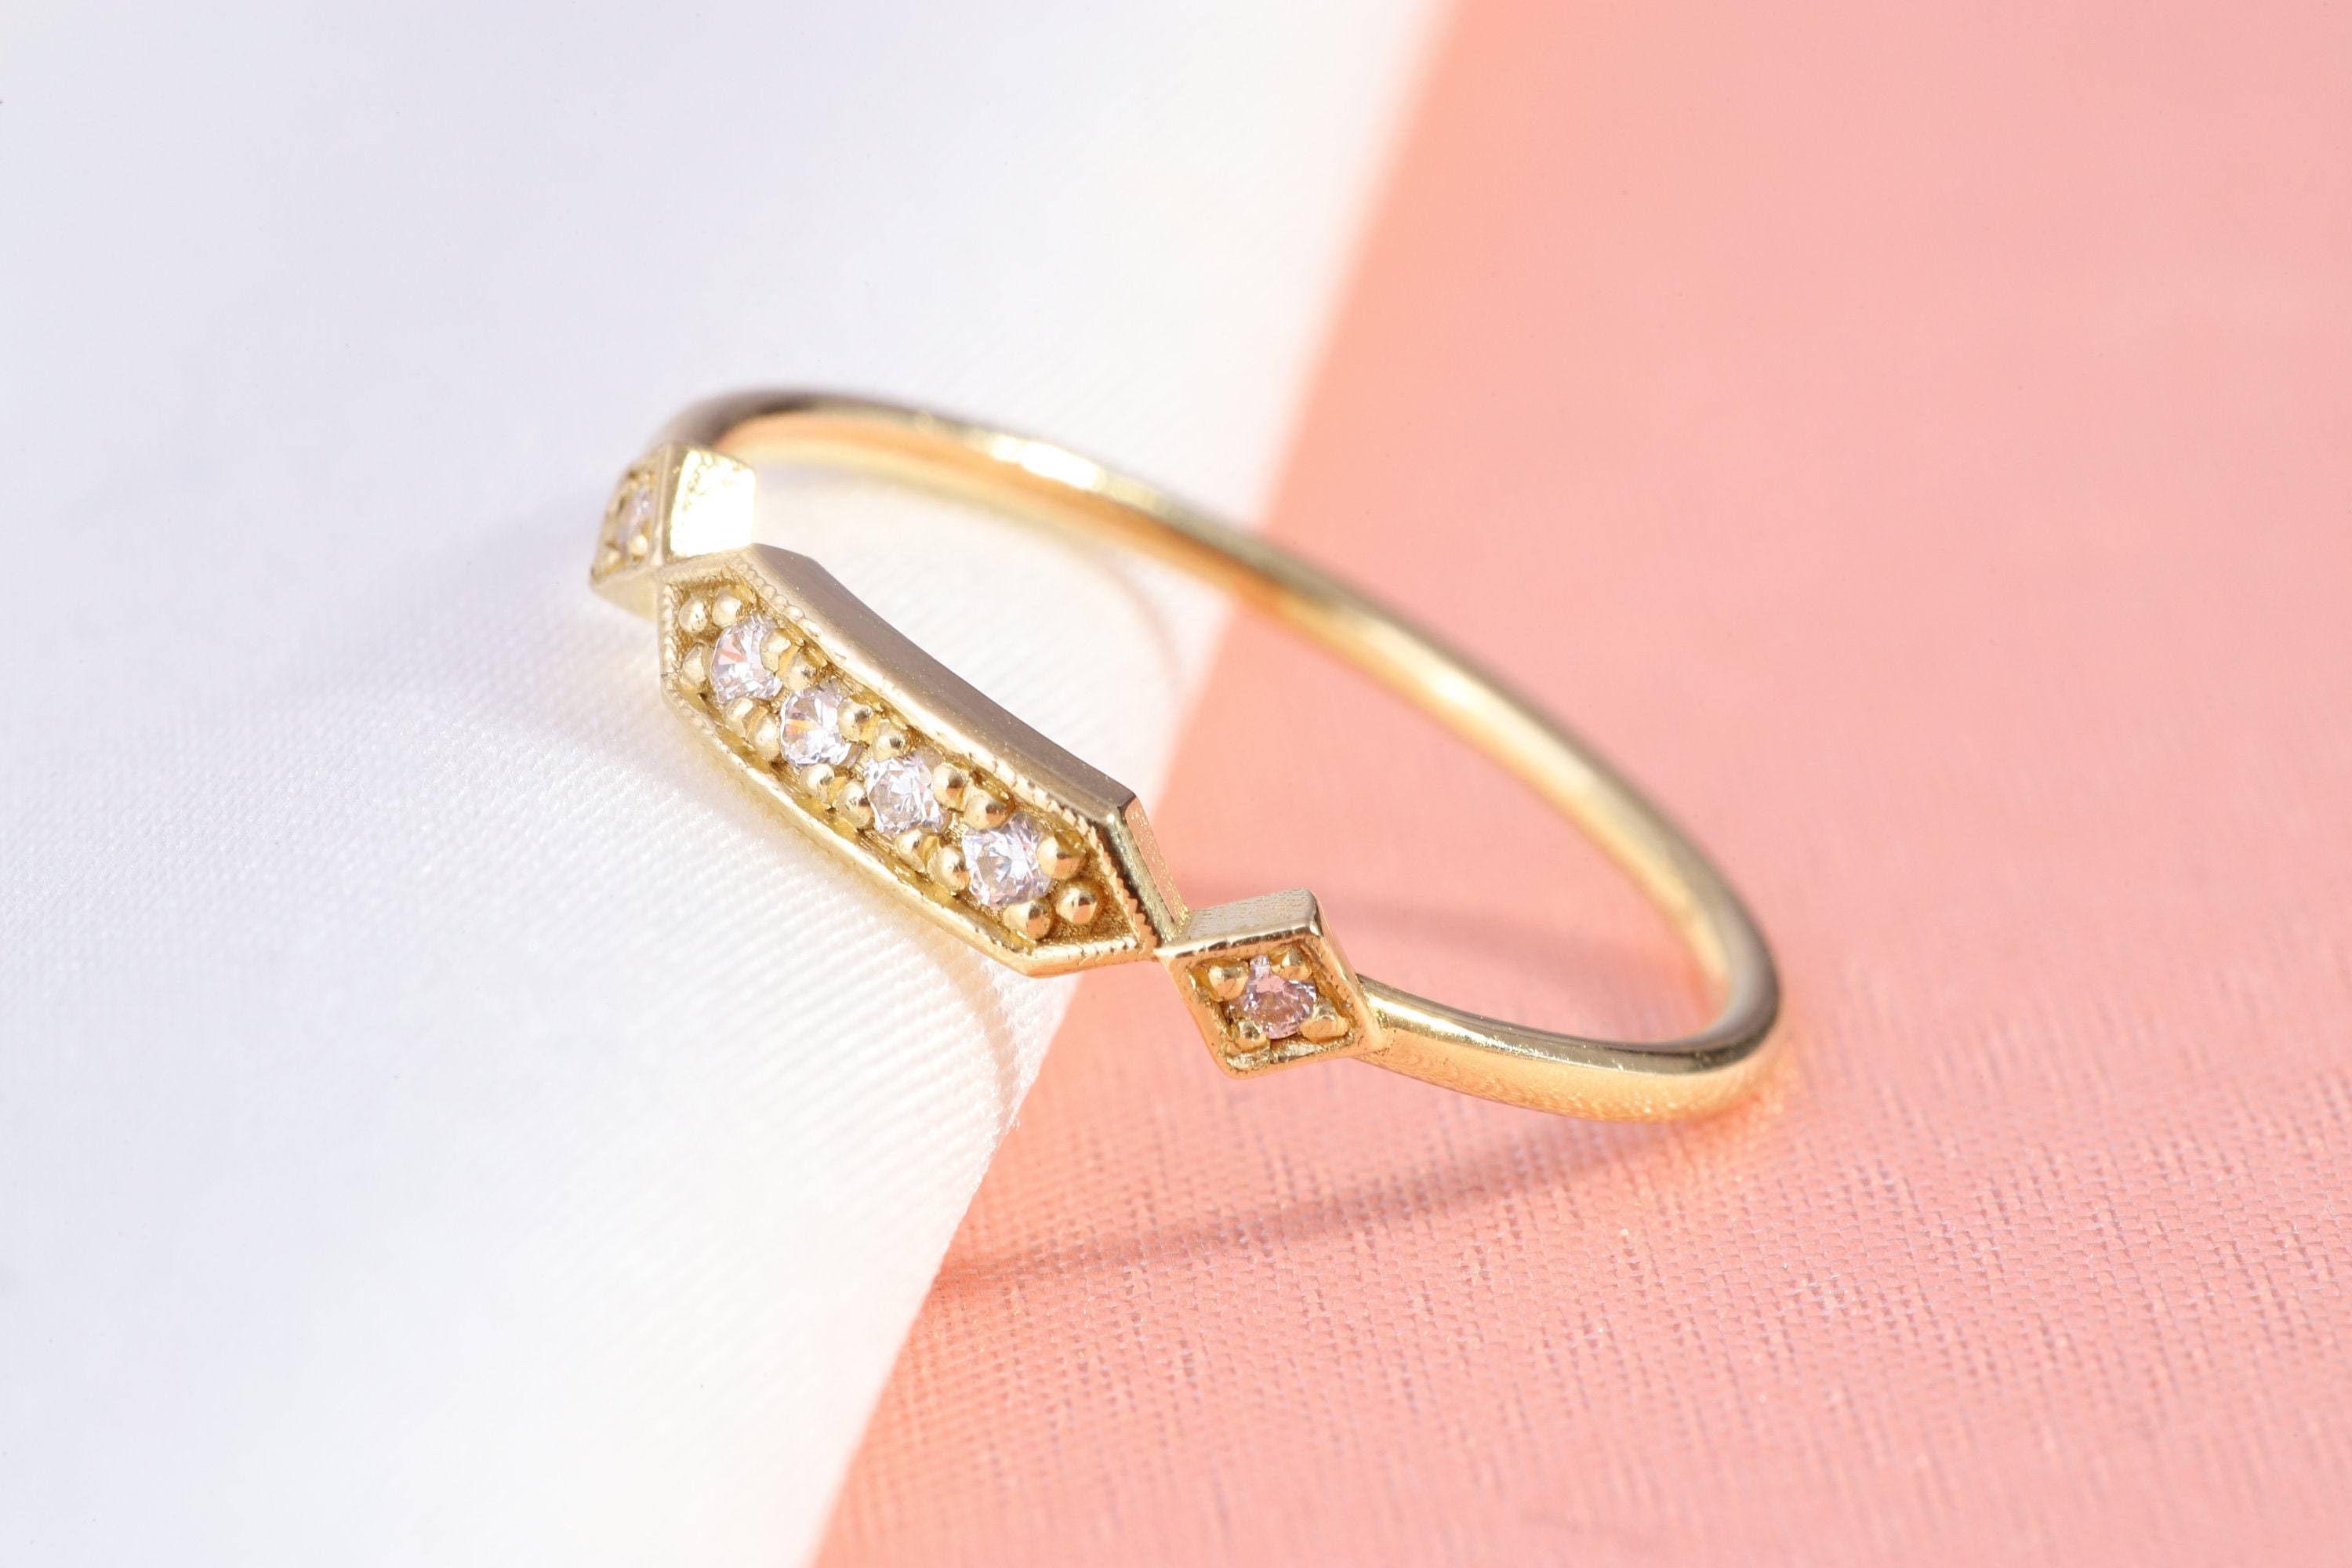 14k Gold Vertical Bar Ring, Diamond Bar Ring, Stackable Ring, Gold Ring,  Rings for Women, Big Rings, Fashion Ring, Wide Ring, Thin Bar Ring 